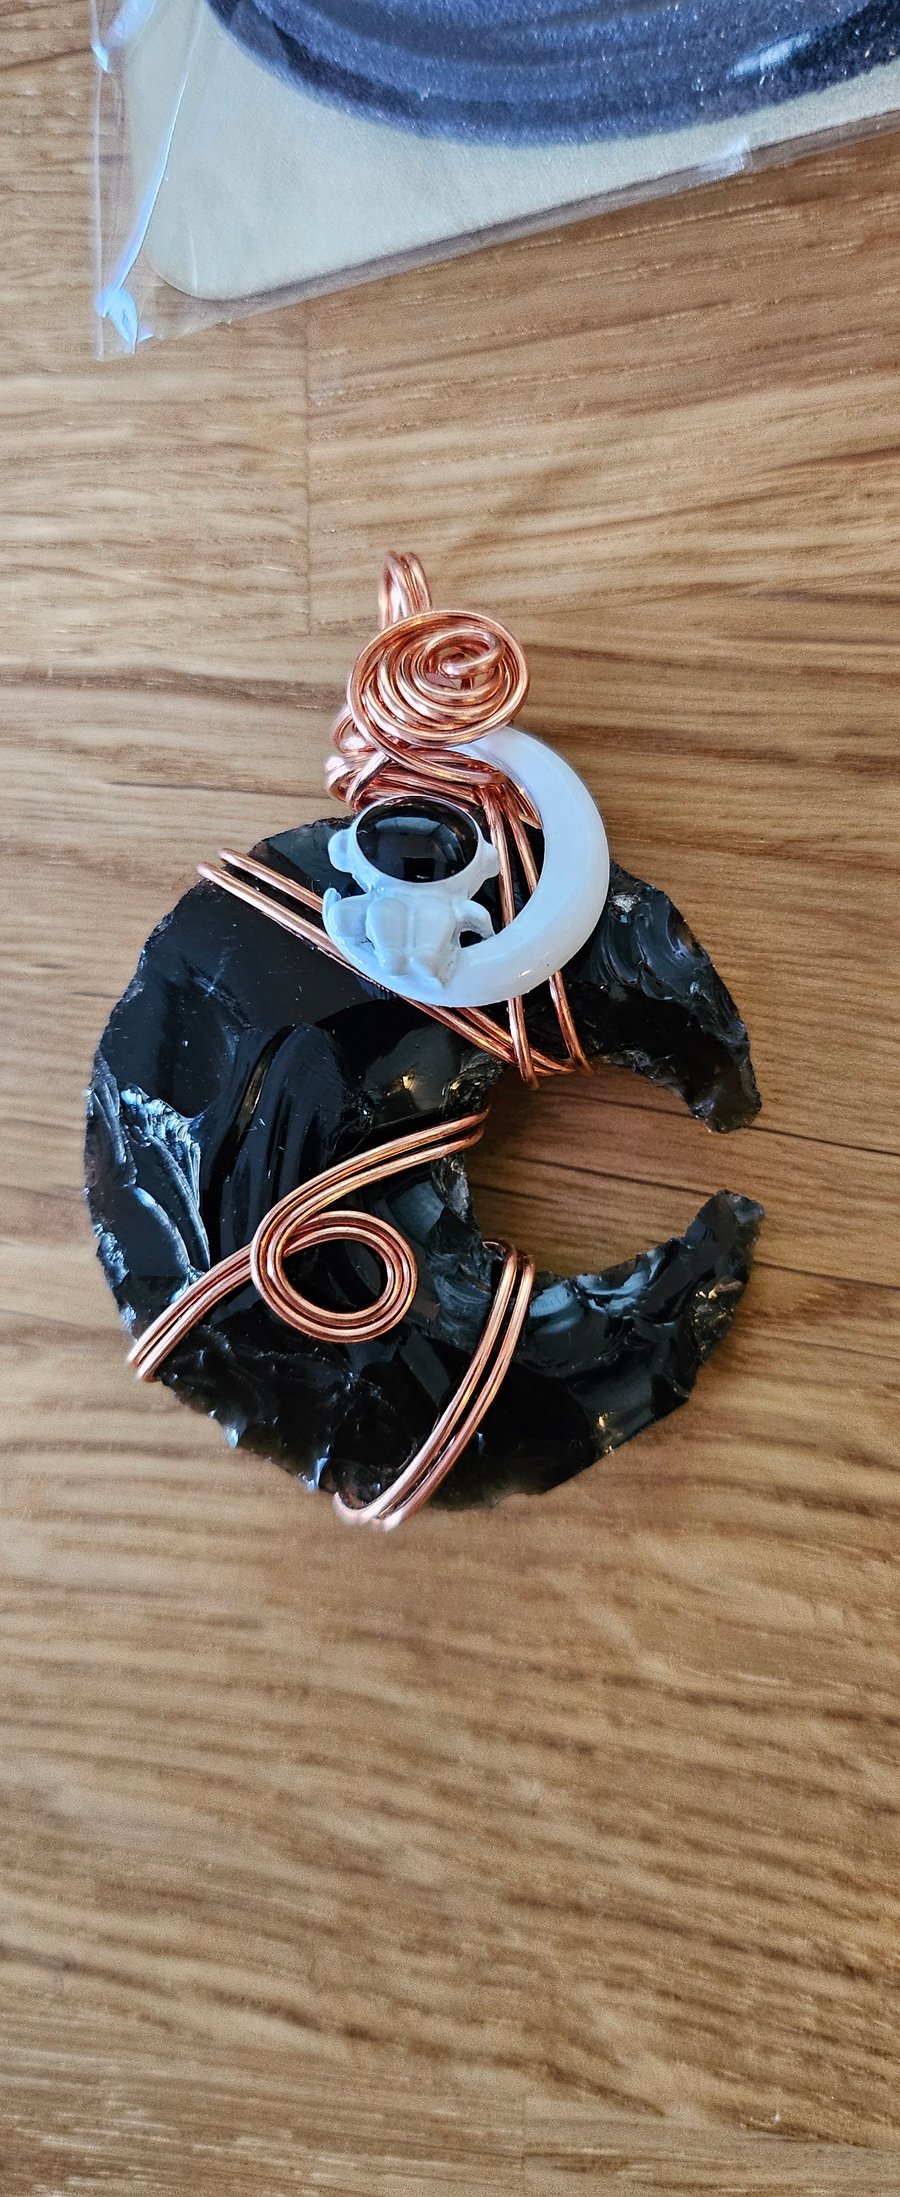 Black Obsidian MoonMan Pendant (1)